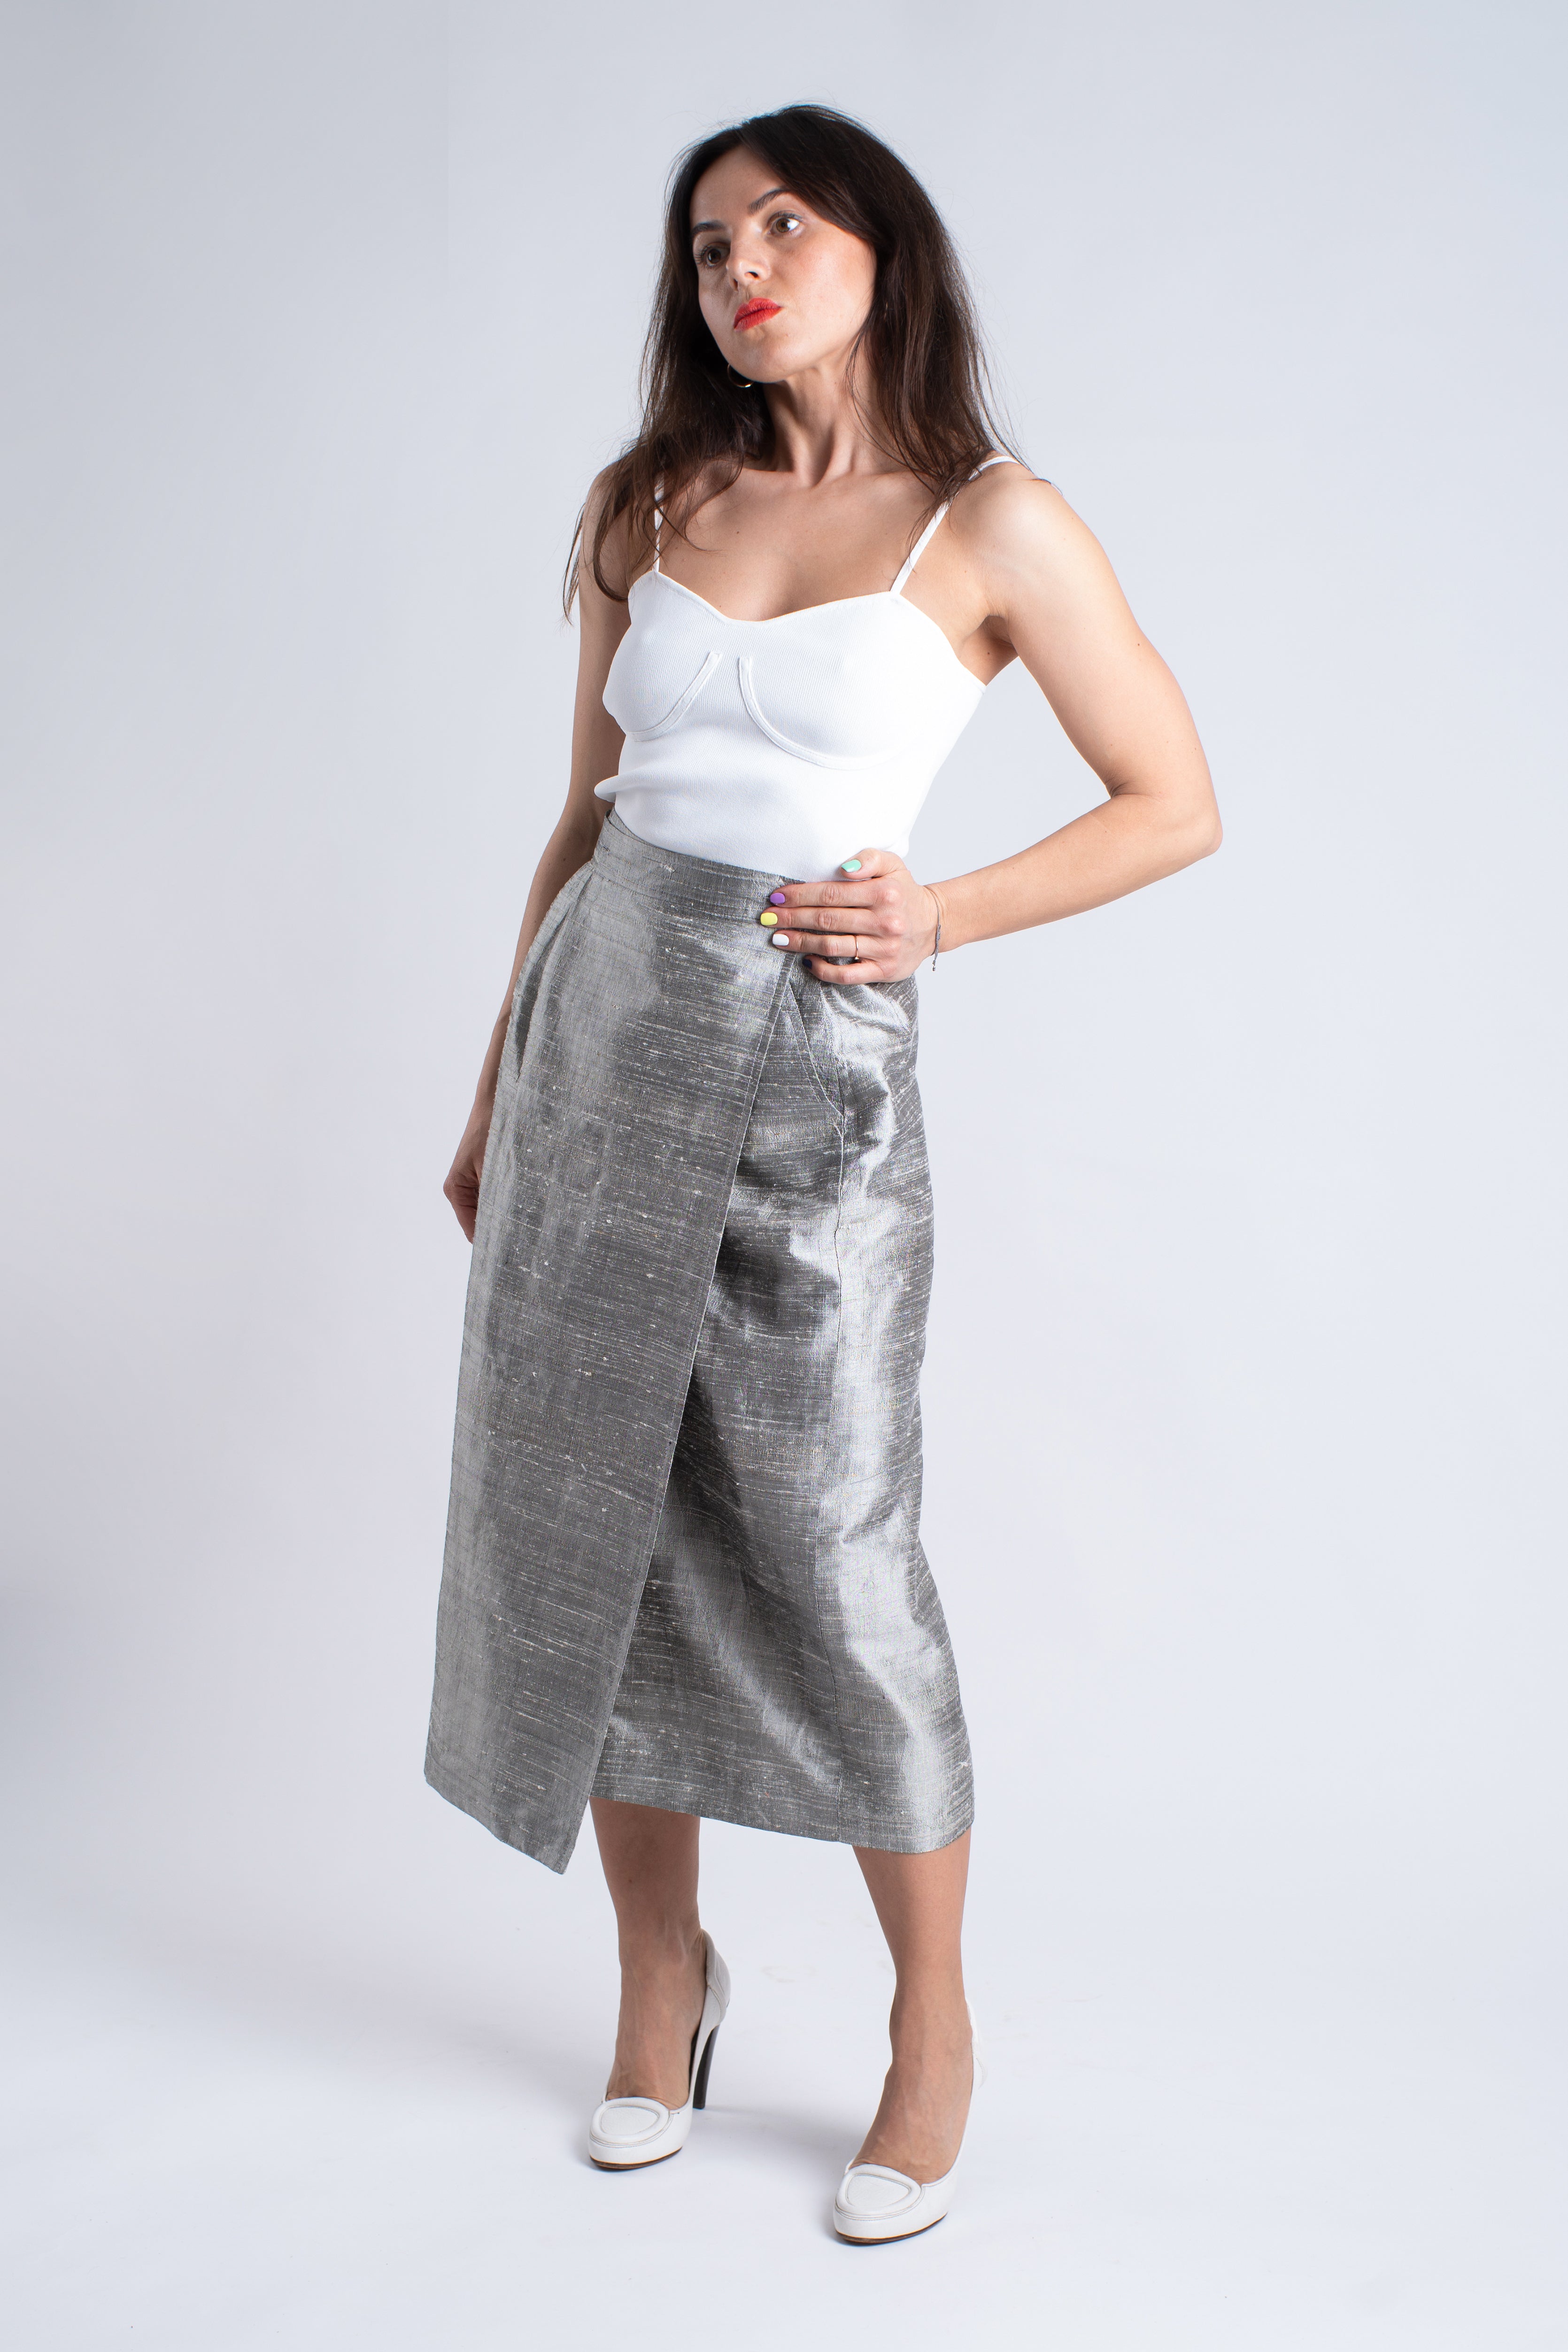 Vintage Pure Silk Metallic Silver Wrap Midi Skirt, Size M